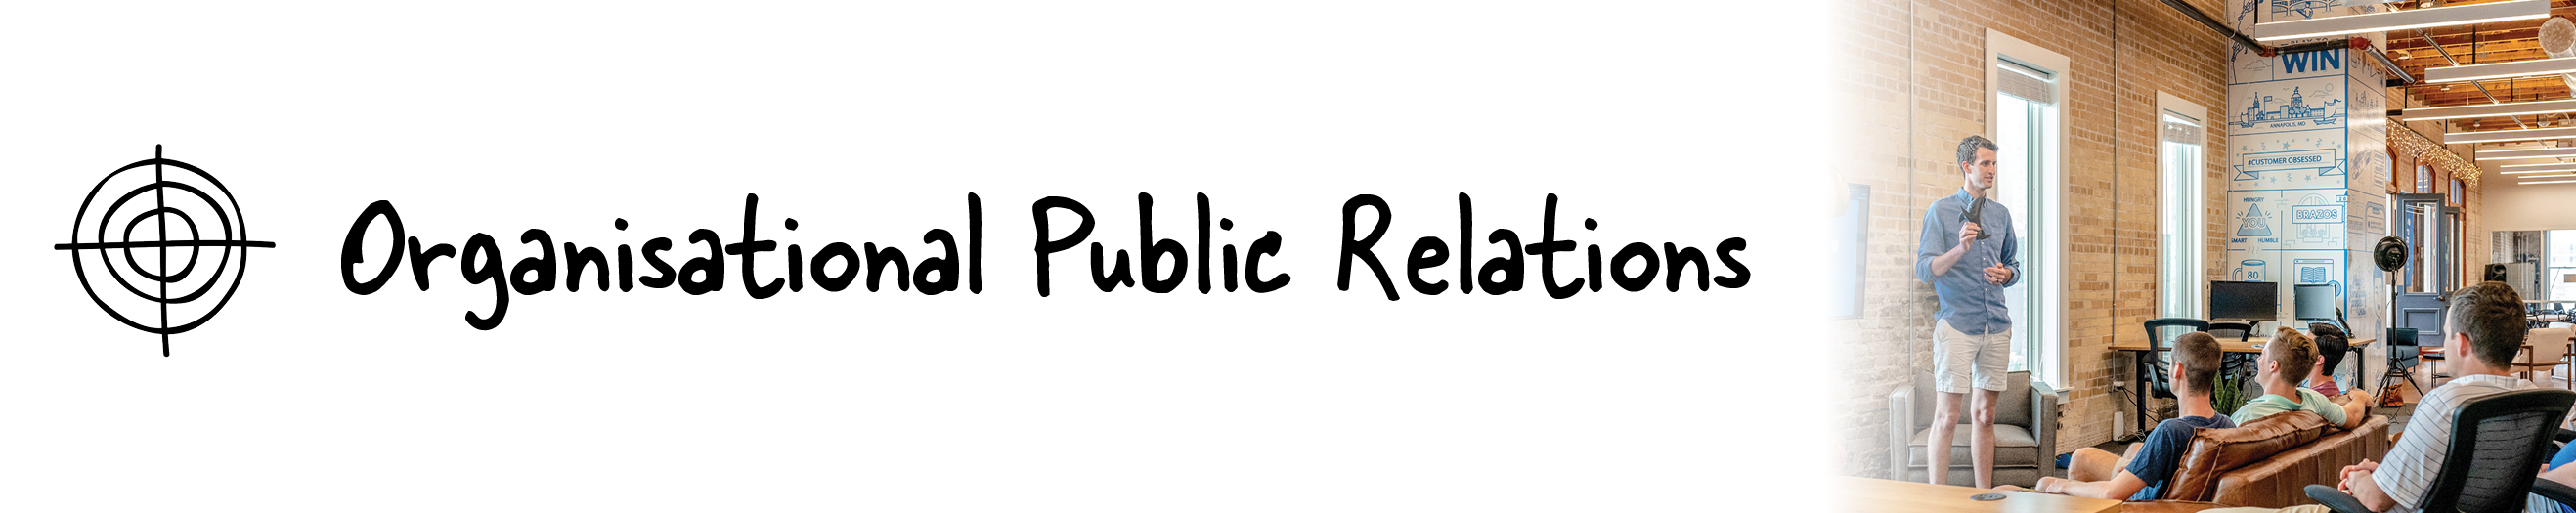 Organisational Public Relations - COPY